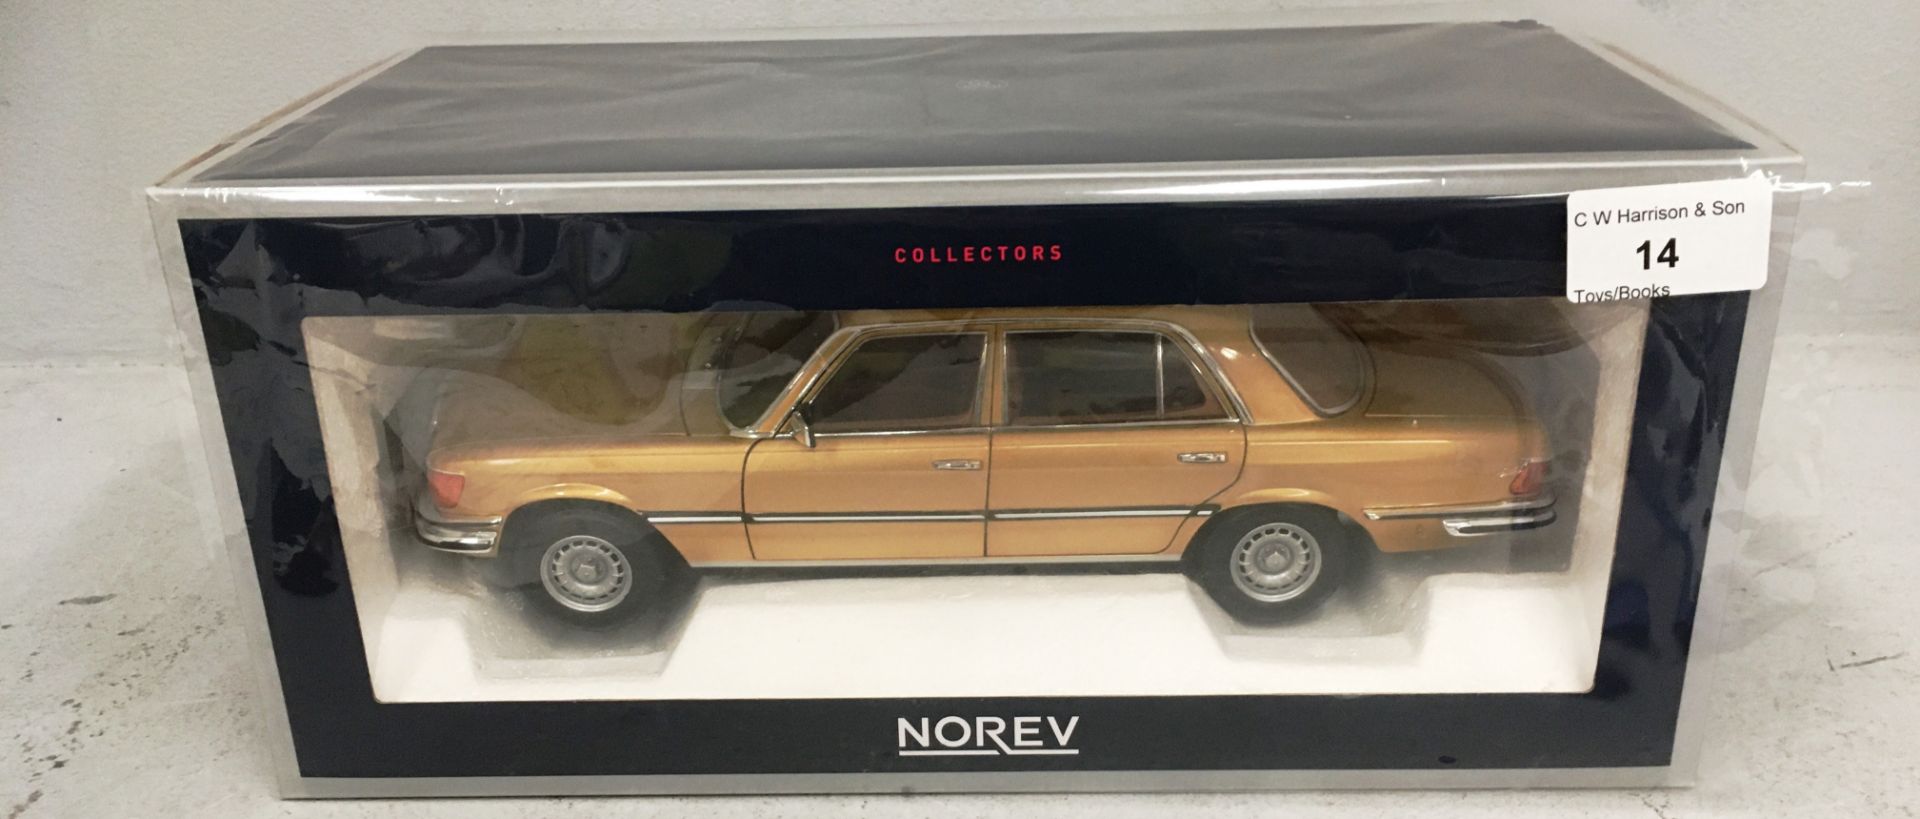 Norev Collectors 1/18 scale die cast metal model of Mercedes-Benz 450 SEL 6.